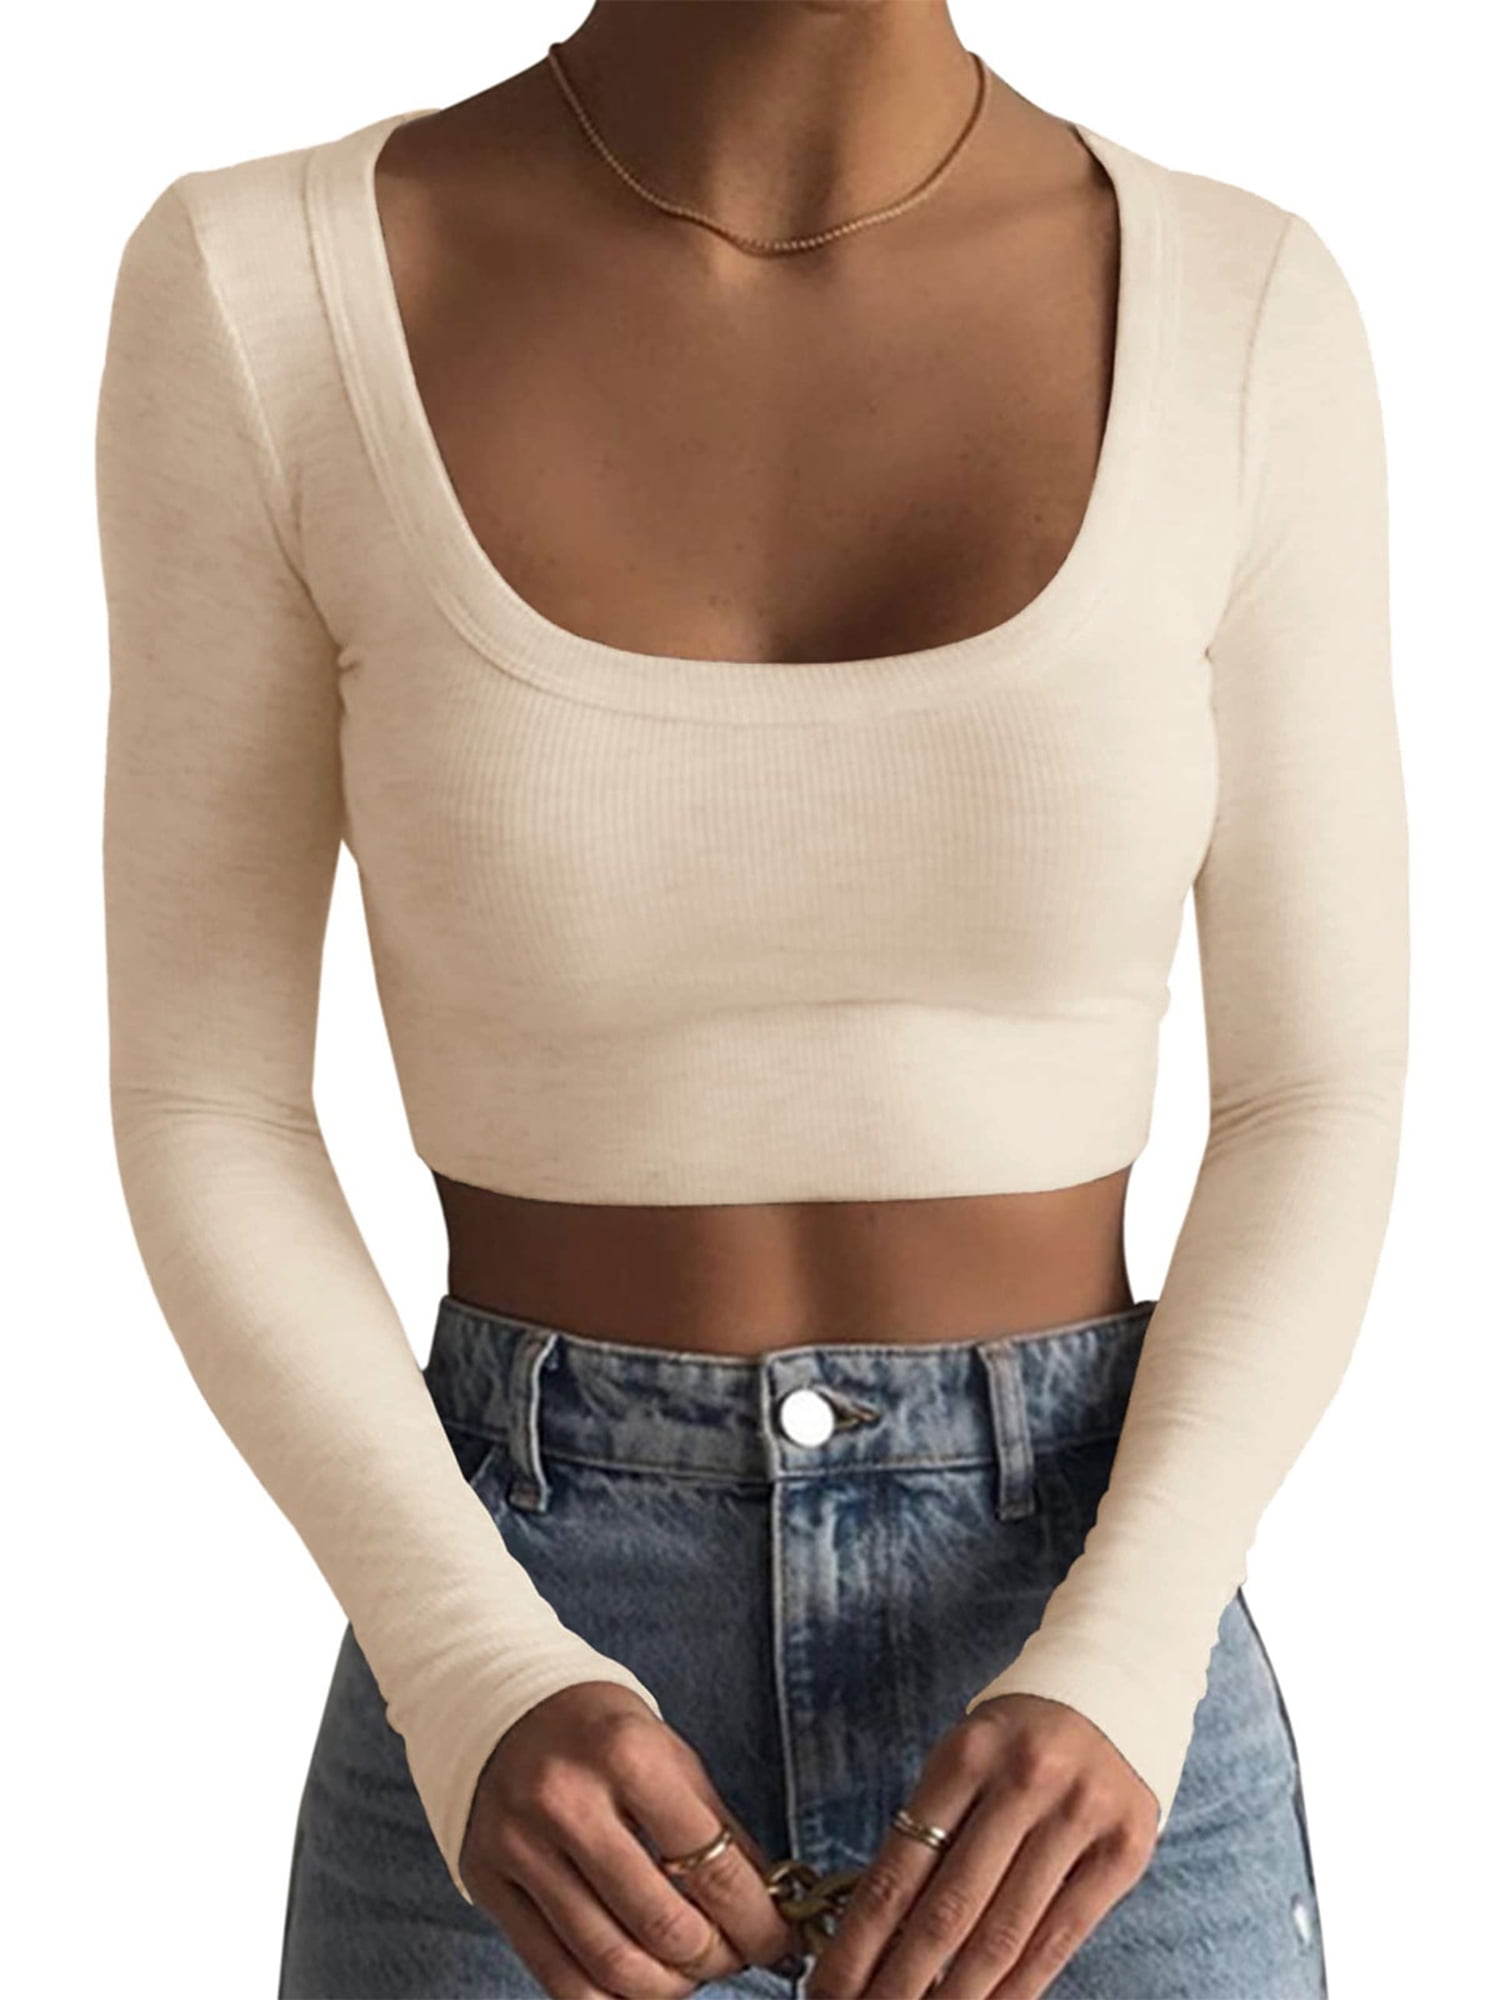 Women's Low-Cut Crop Tops Blouse T-Shirt Elastic Slim Soft Tops